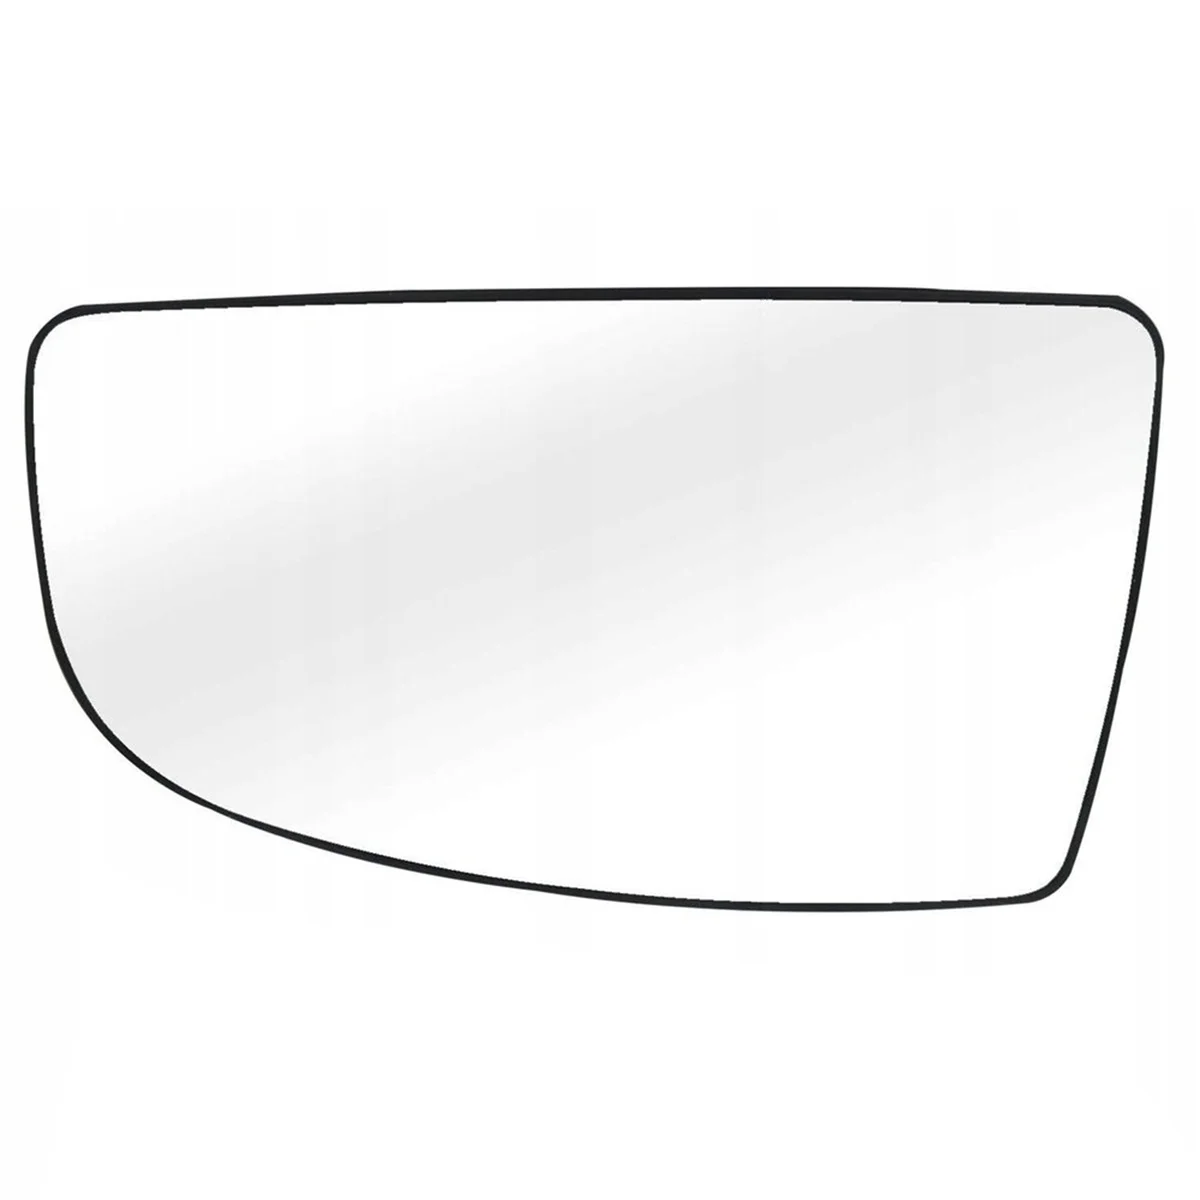 

Car Front Left Lower Door Wing Rear View Mirror Lens Glass for TRANSIT MK8 V363 2014 -2020 BK3117C718AB